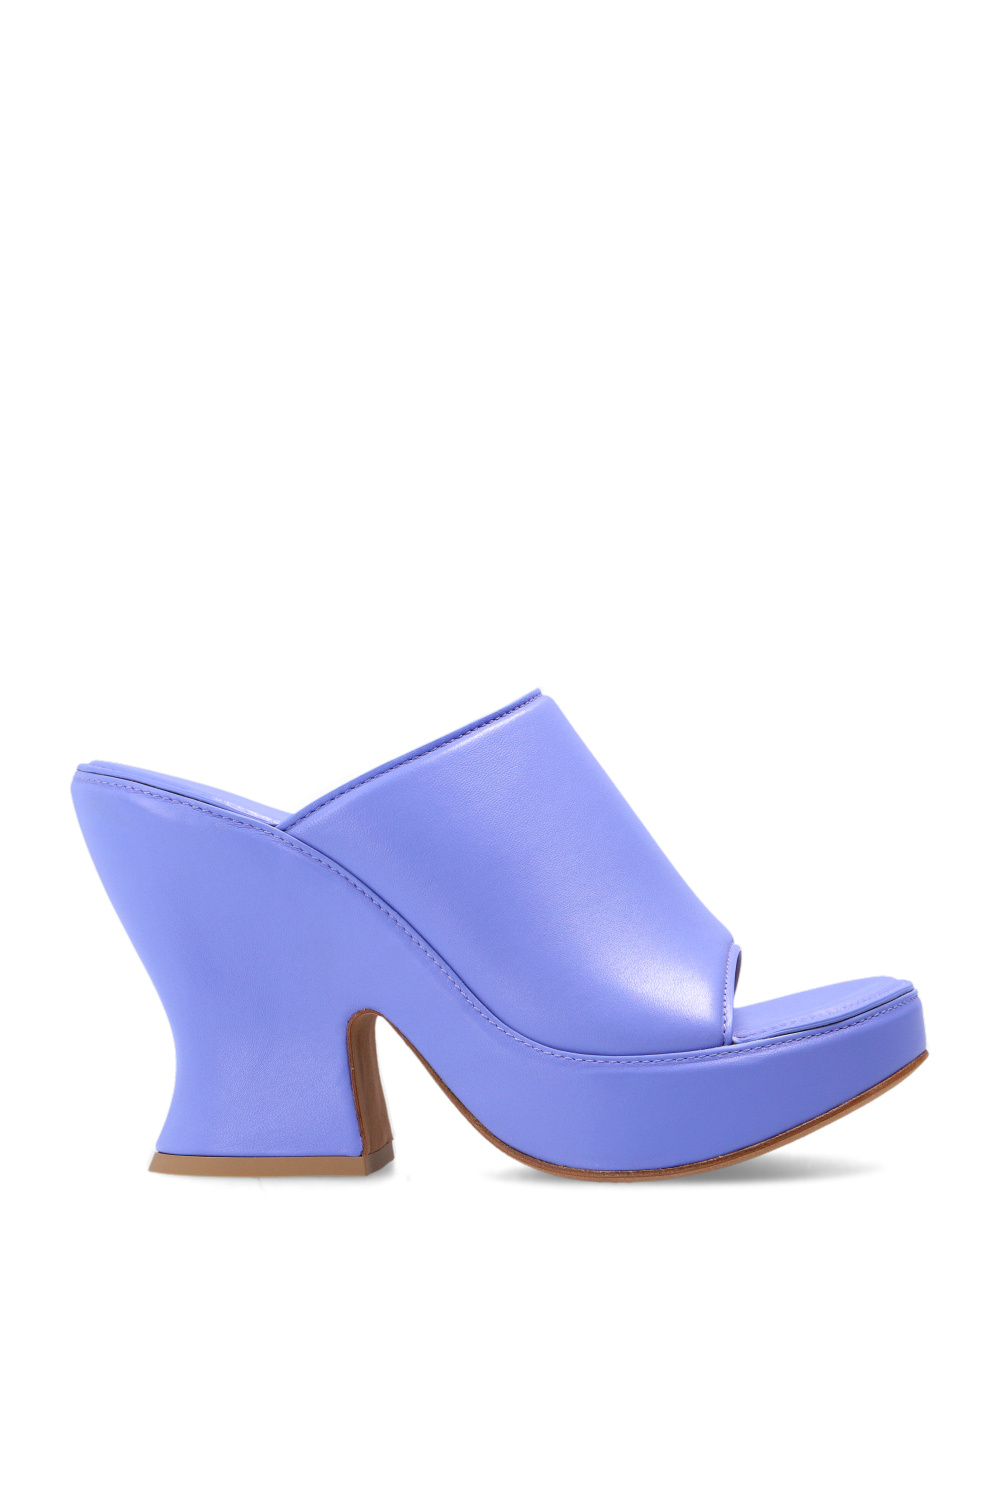 Bottega Veneta Heeled mules | Women's Shoes | Vitkac